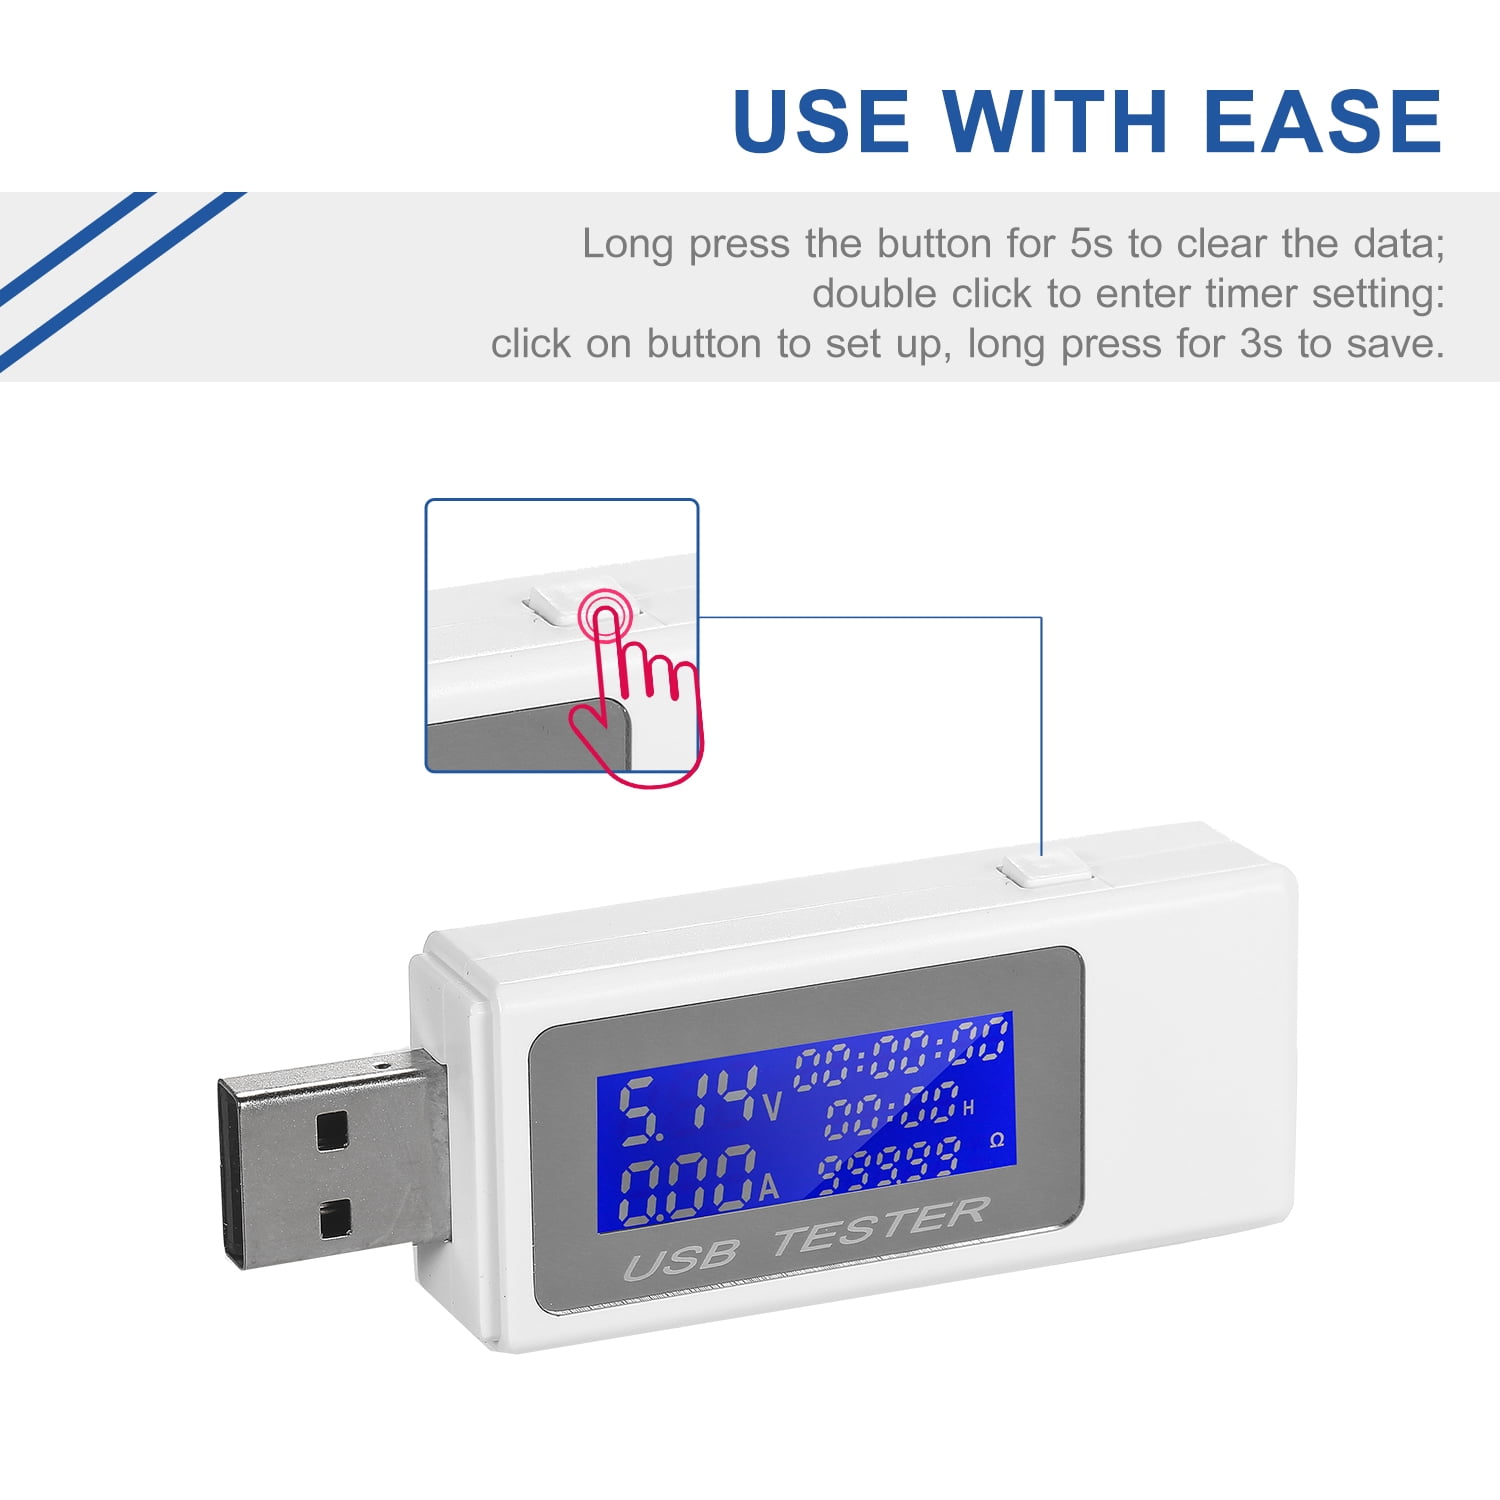 Details about   USB Power Meter Voltage Current Tester LCD Voltmeter Ammeter Detector Tool